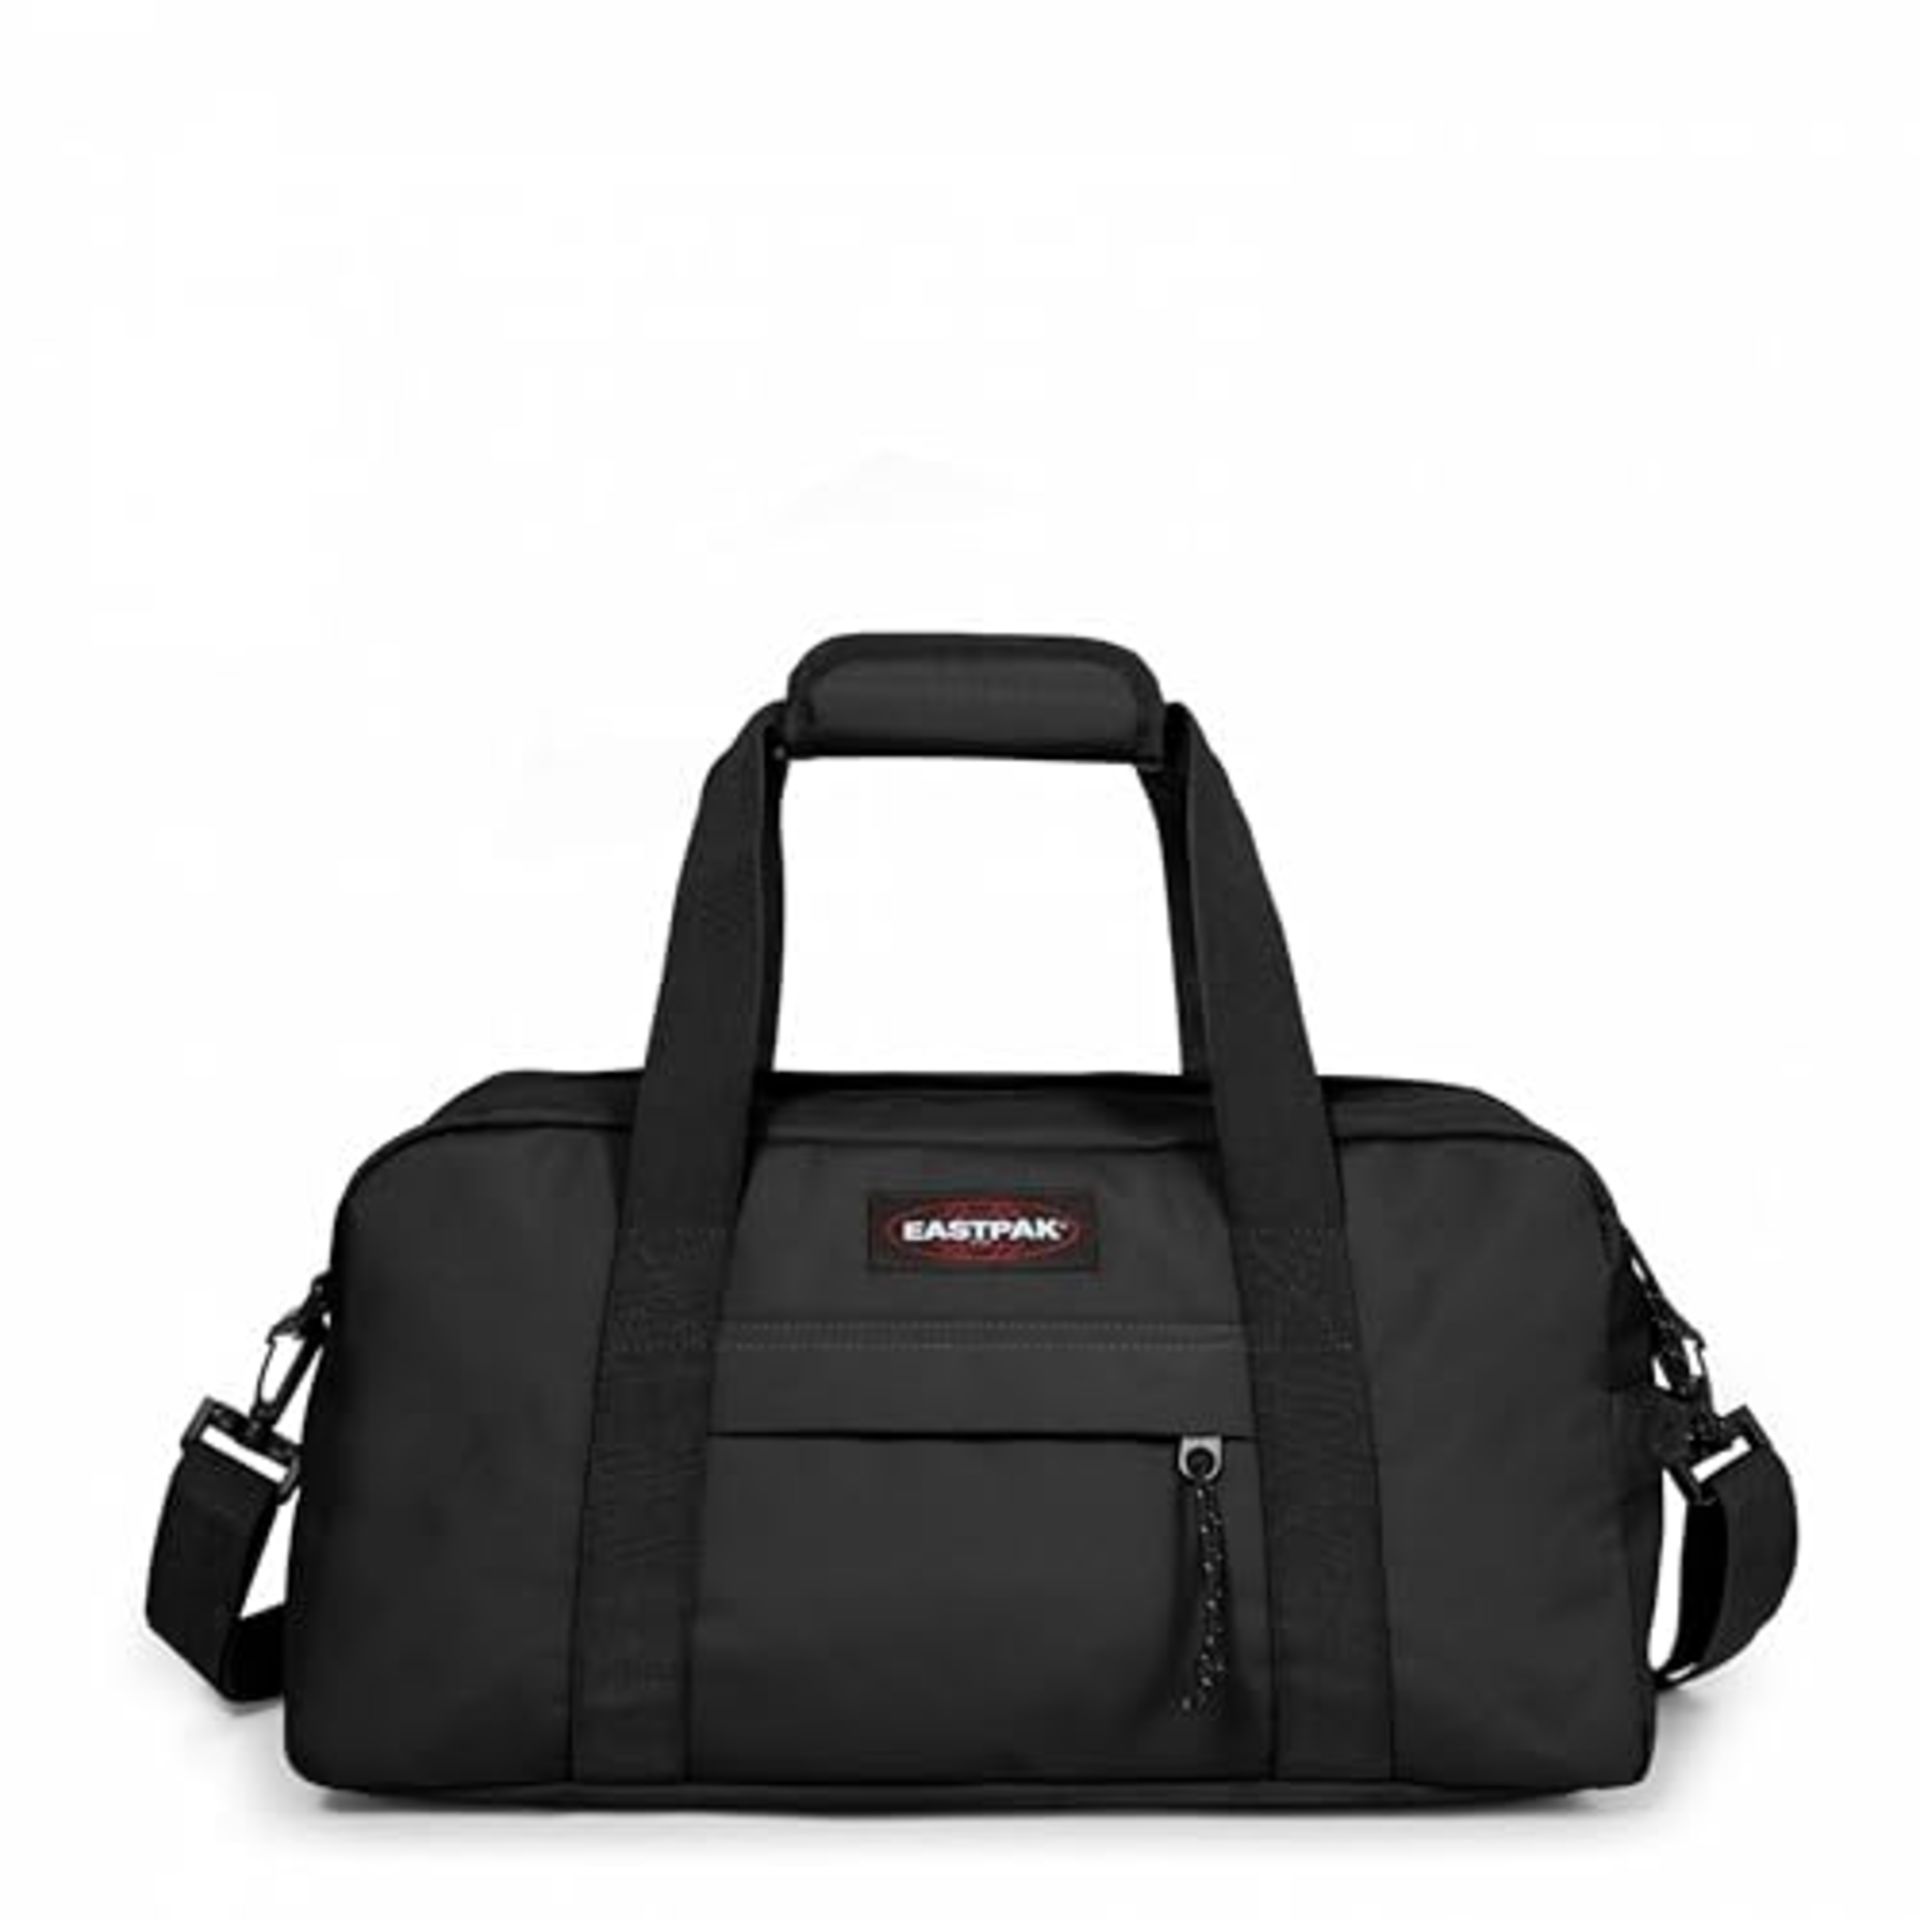 Eastpak COMPACT + Travel Bag, 33.5 cm, 10 L, Black